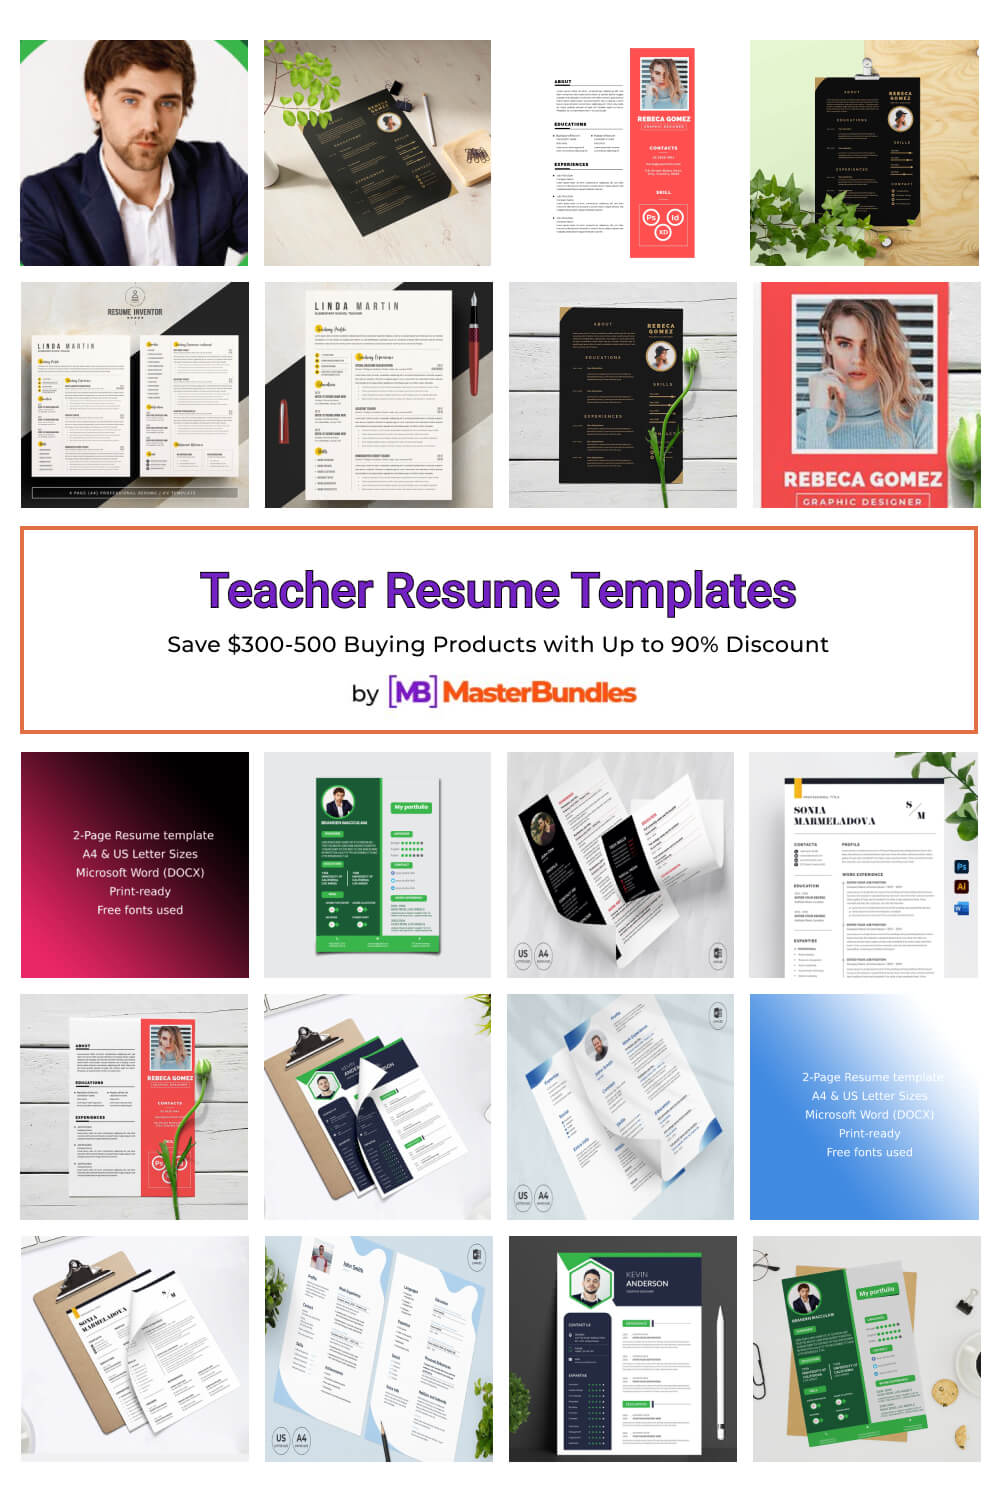 teacher resume templates pinterest image.